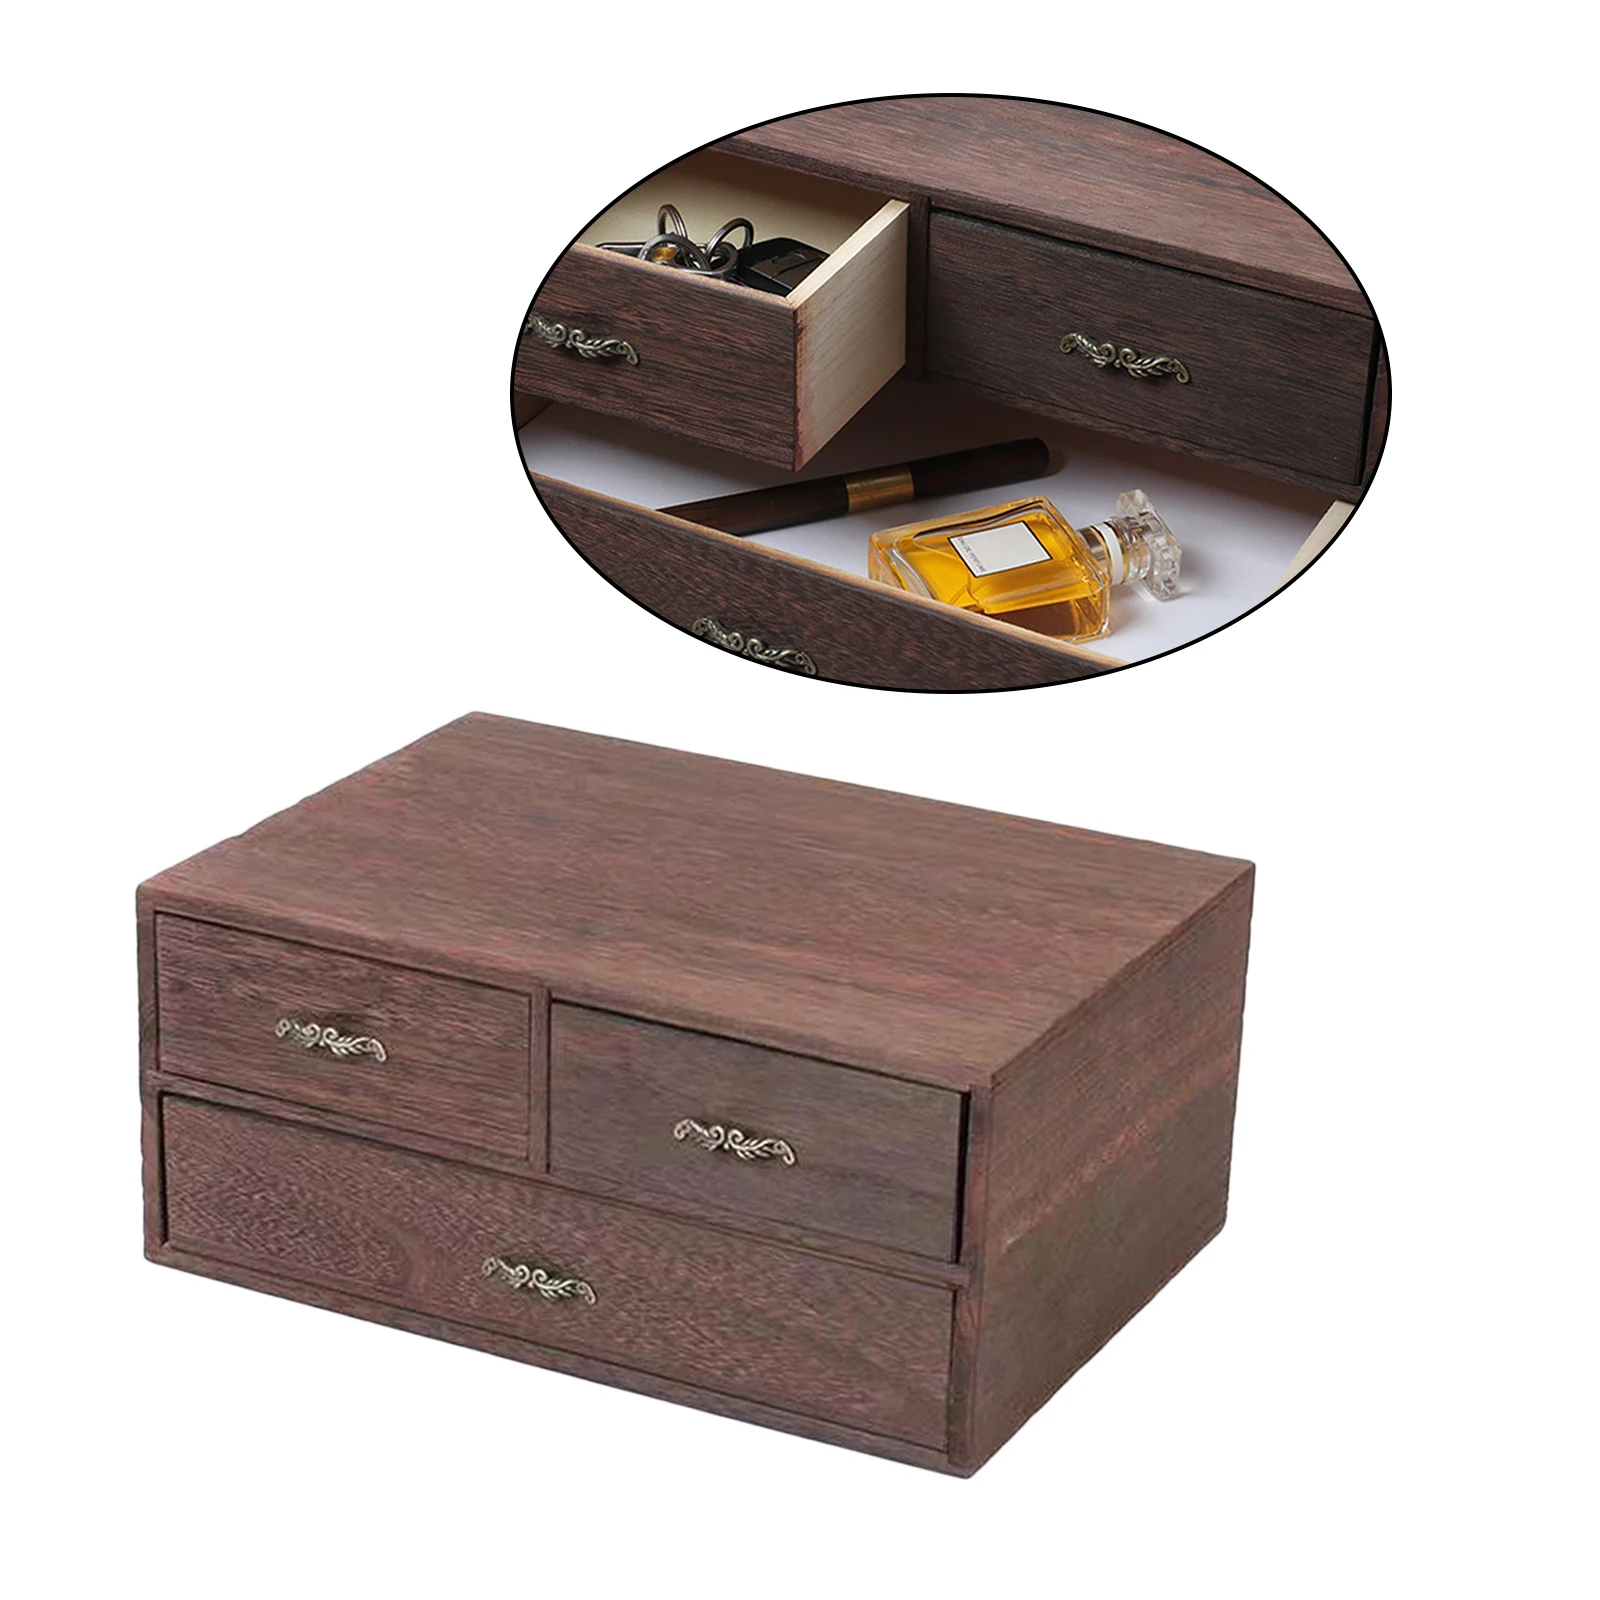 Retro Jewelry Box Drawer Type Organizer Desktop Wood Storage Case Home Decorative Gift Boxes Jewelry Trinket Treasure Organizer